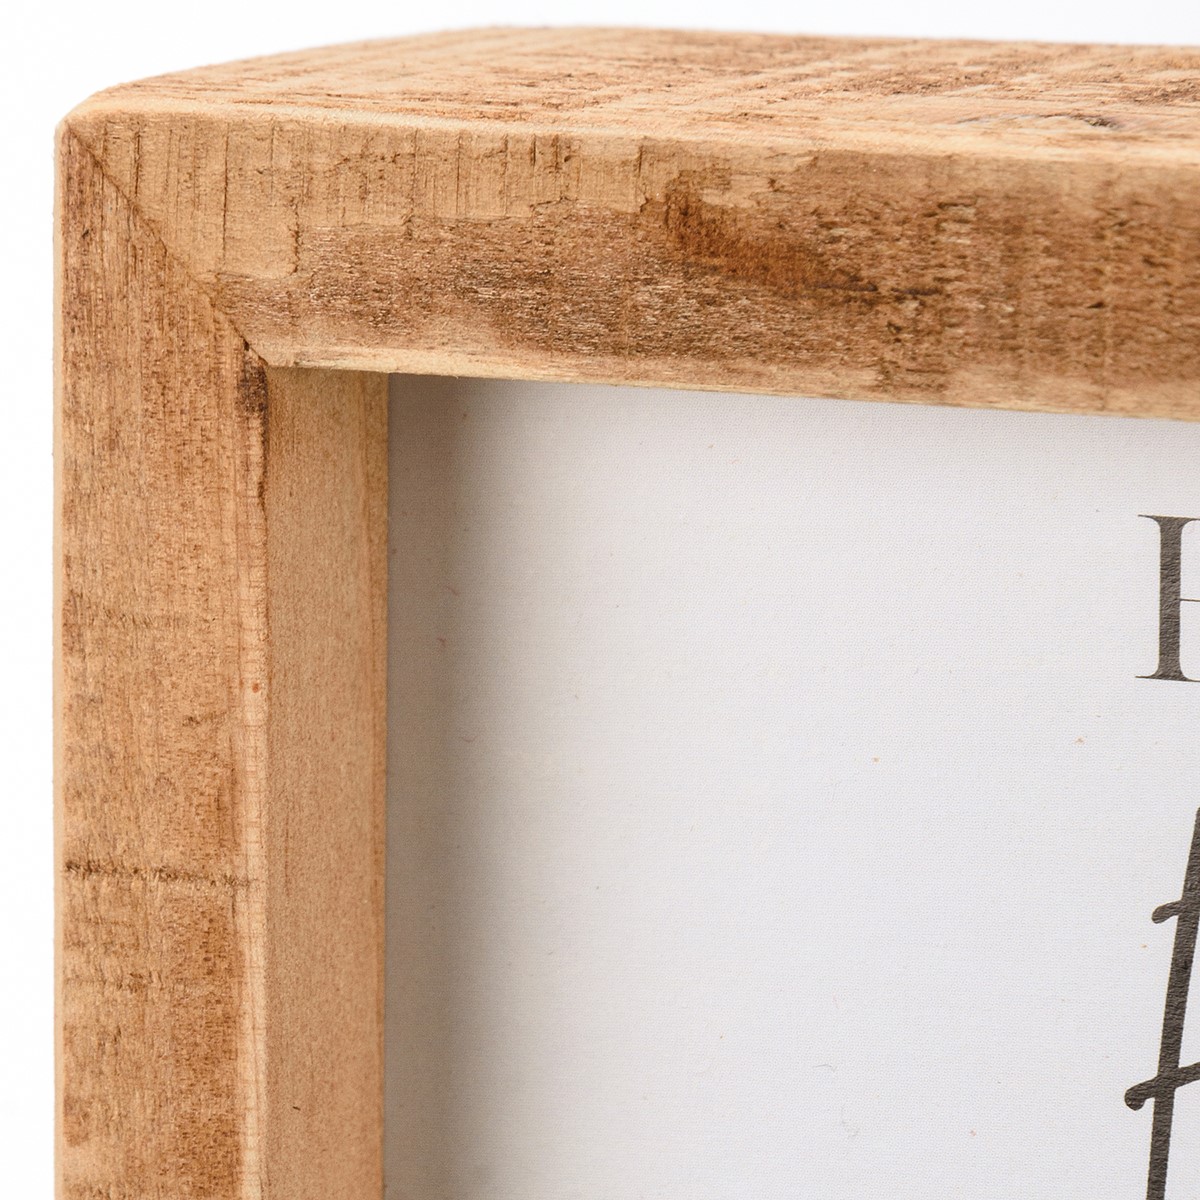 Fiddle Leaf Fig Study Inset Box Sign - Wood, Paper